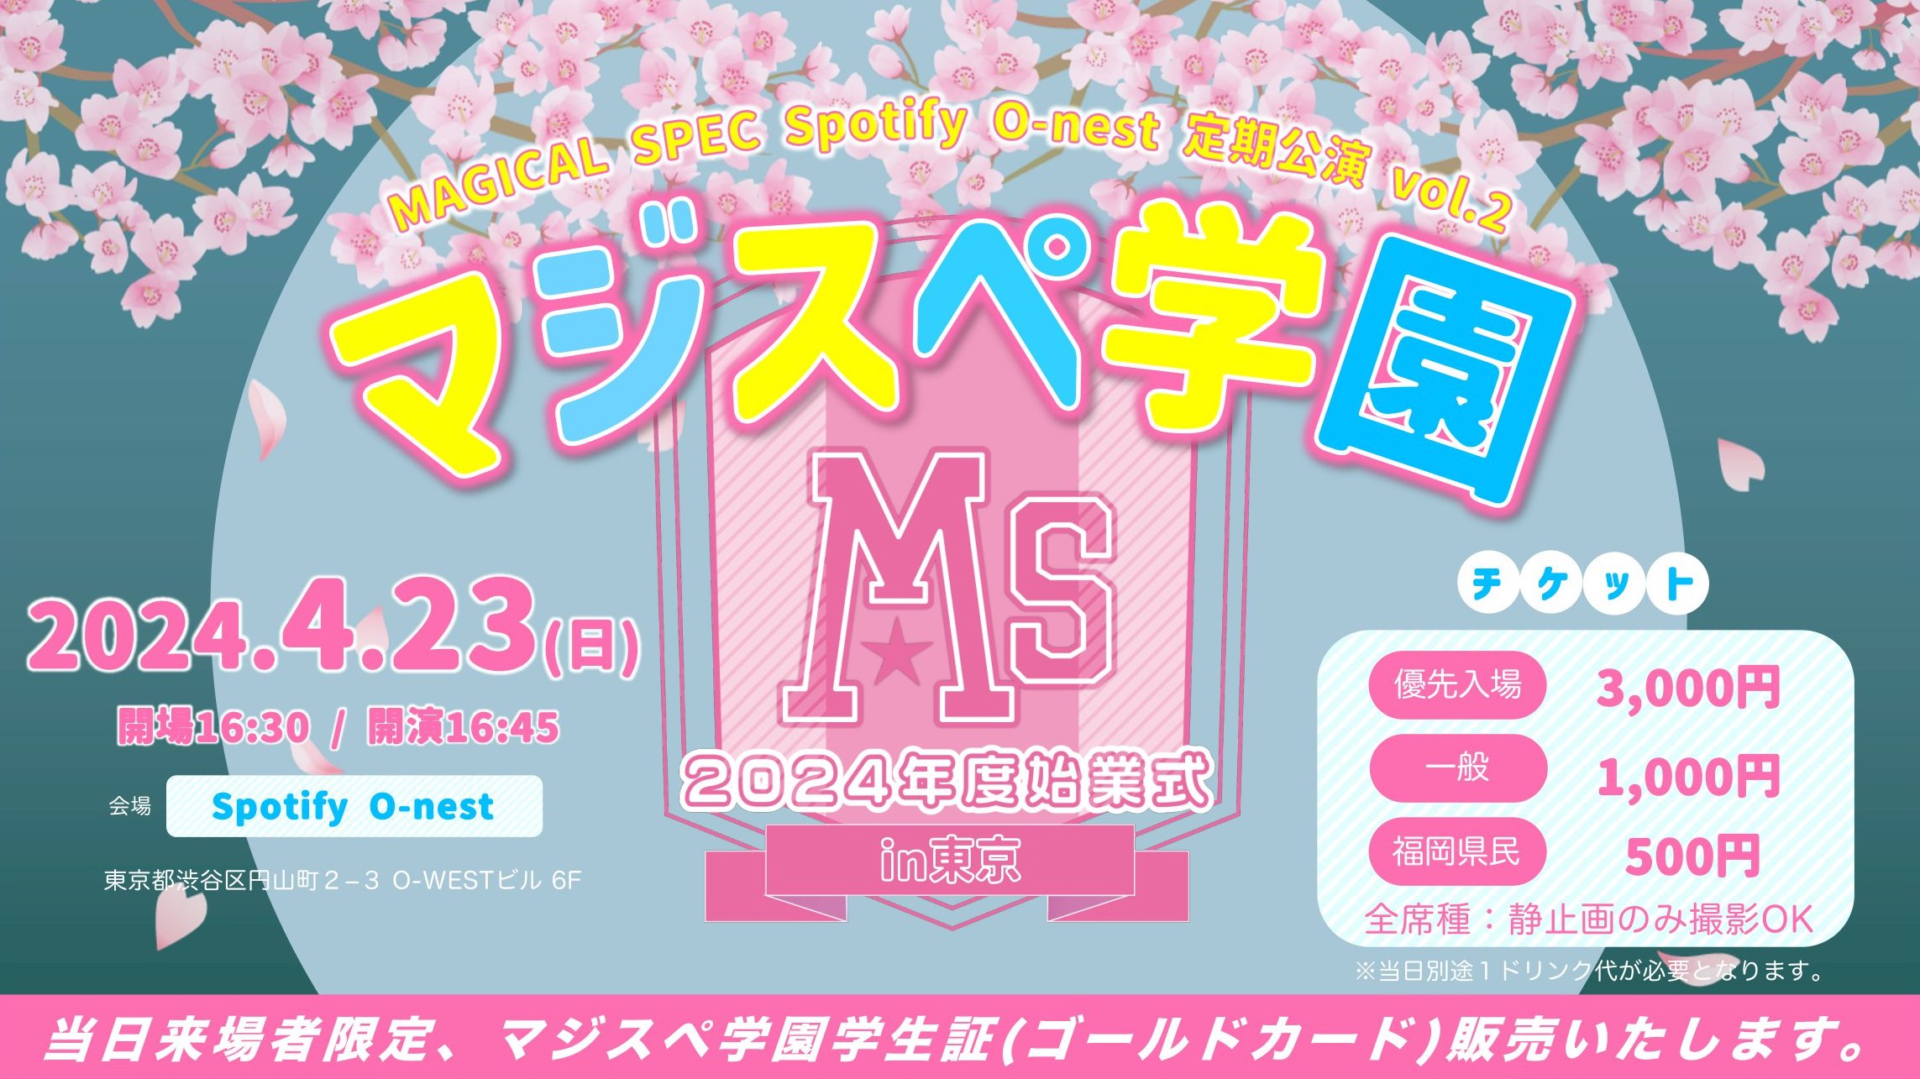 MAGICAL SPEC Spotify O-nest 定期公演 vol.2 1部「マジスペ学園 2024年度 入学式 in 東京」